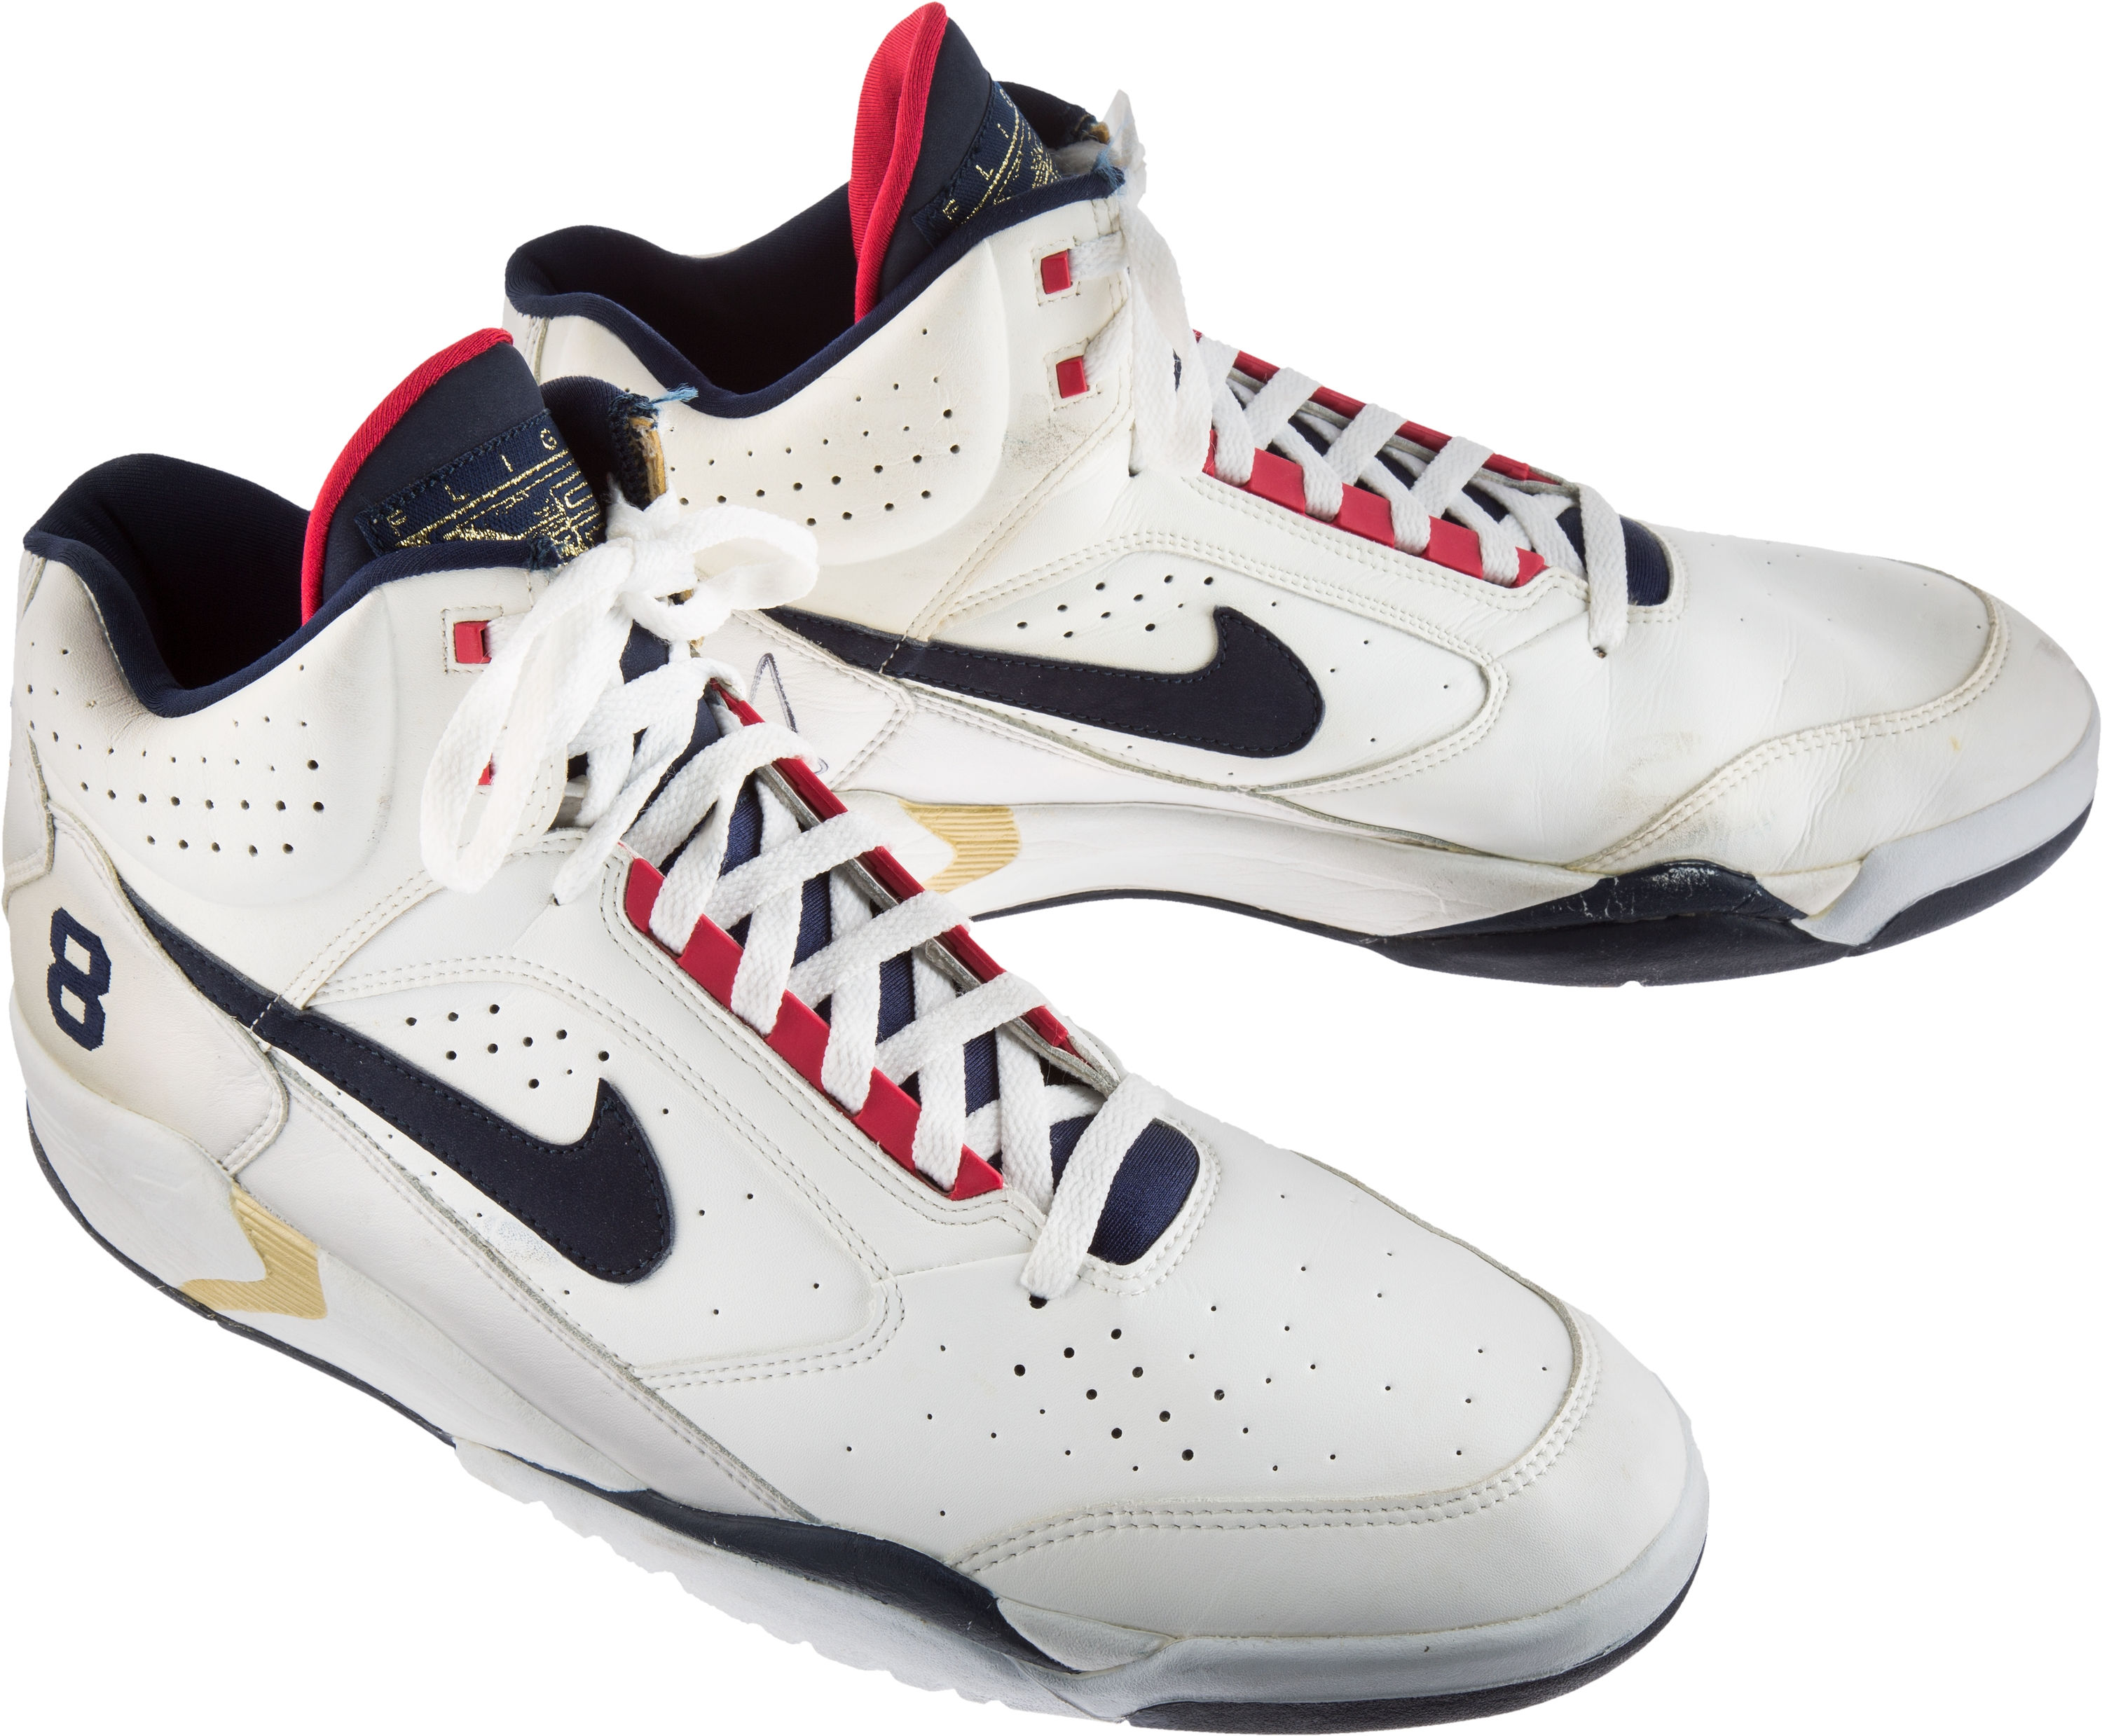 Doctor auctions Michael Jordan's 1992 Olympic shoes, U.S. Dream